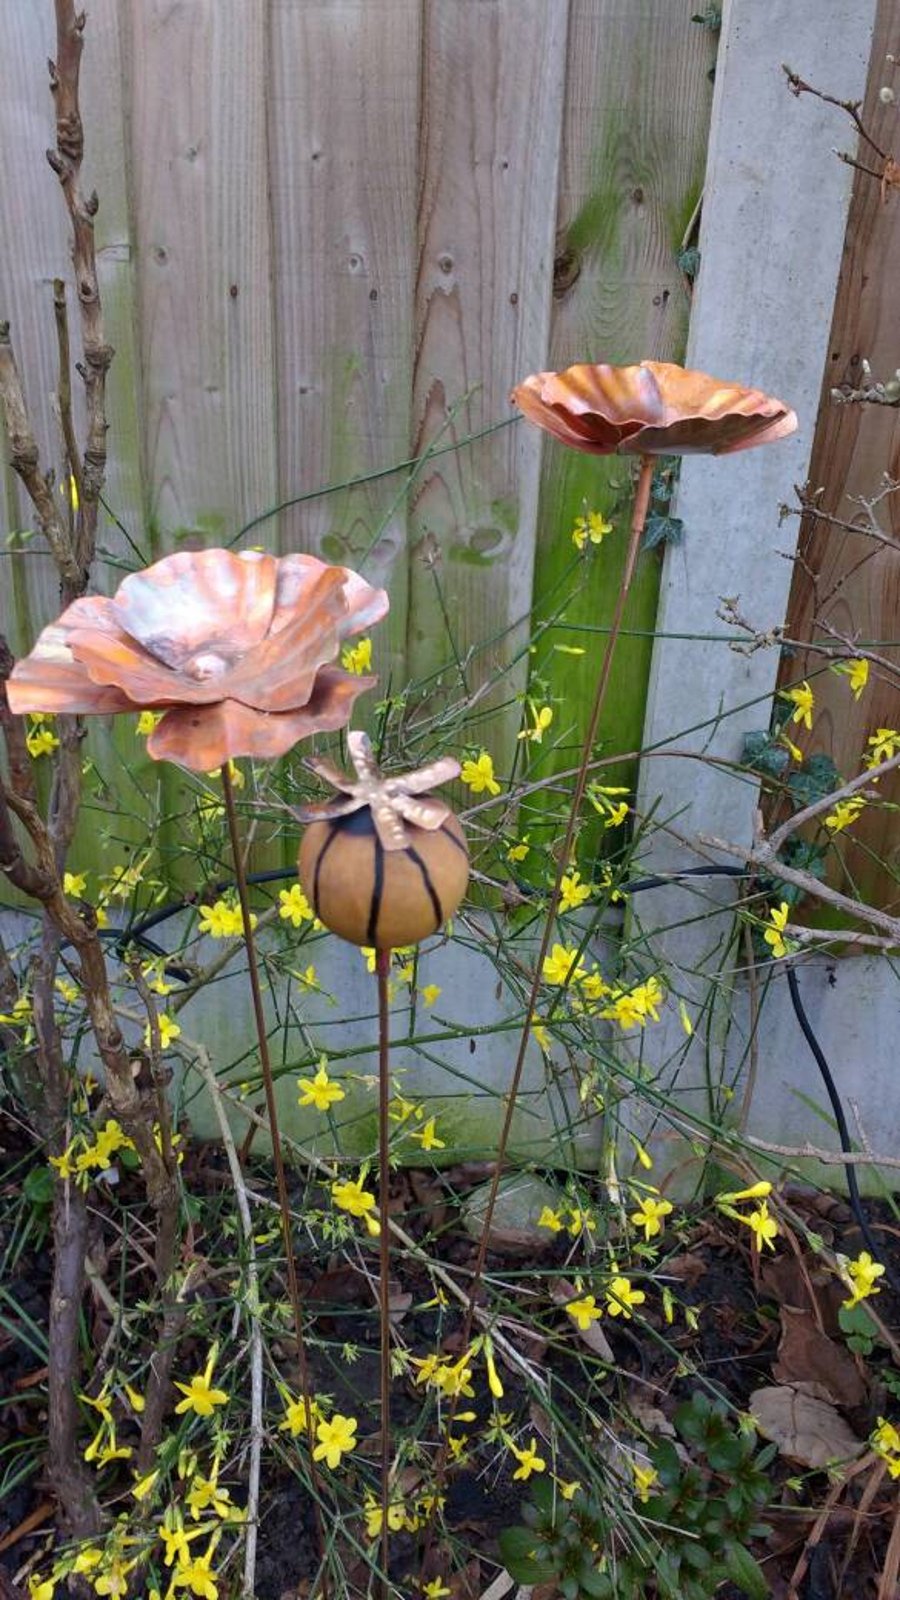 Copper poppy garden stakes